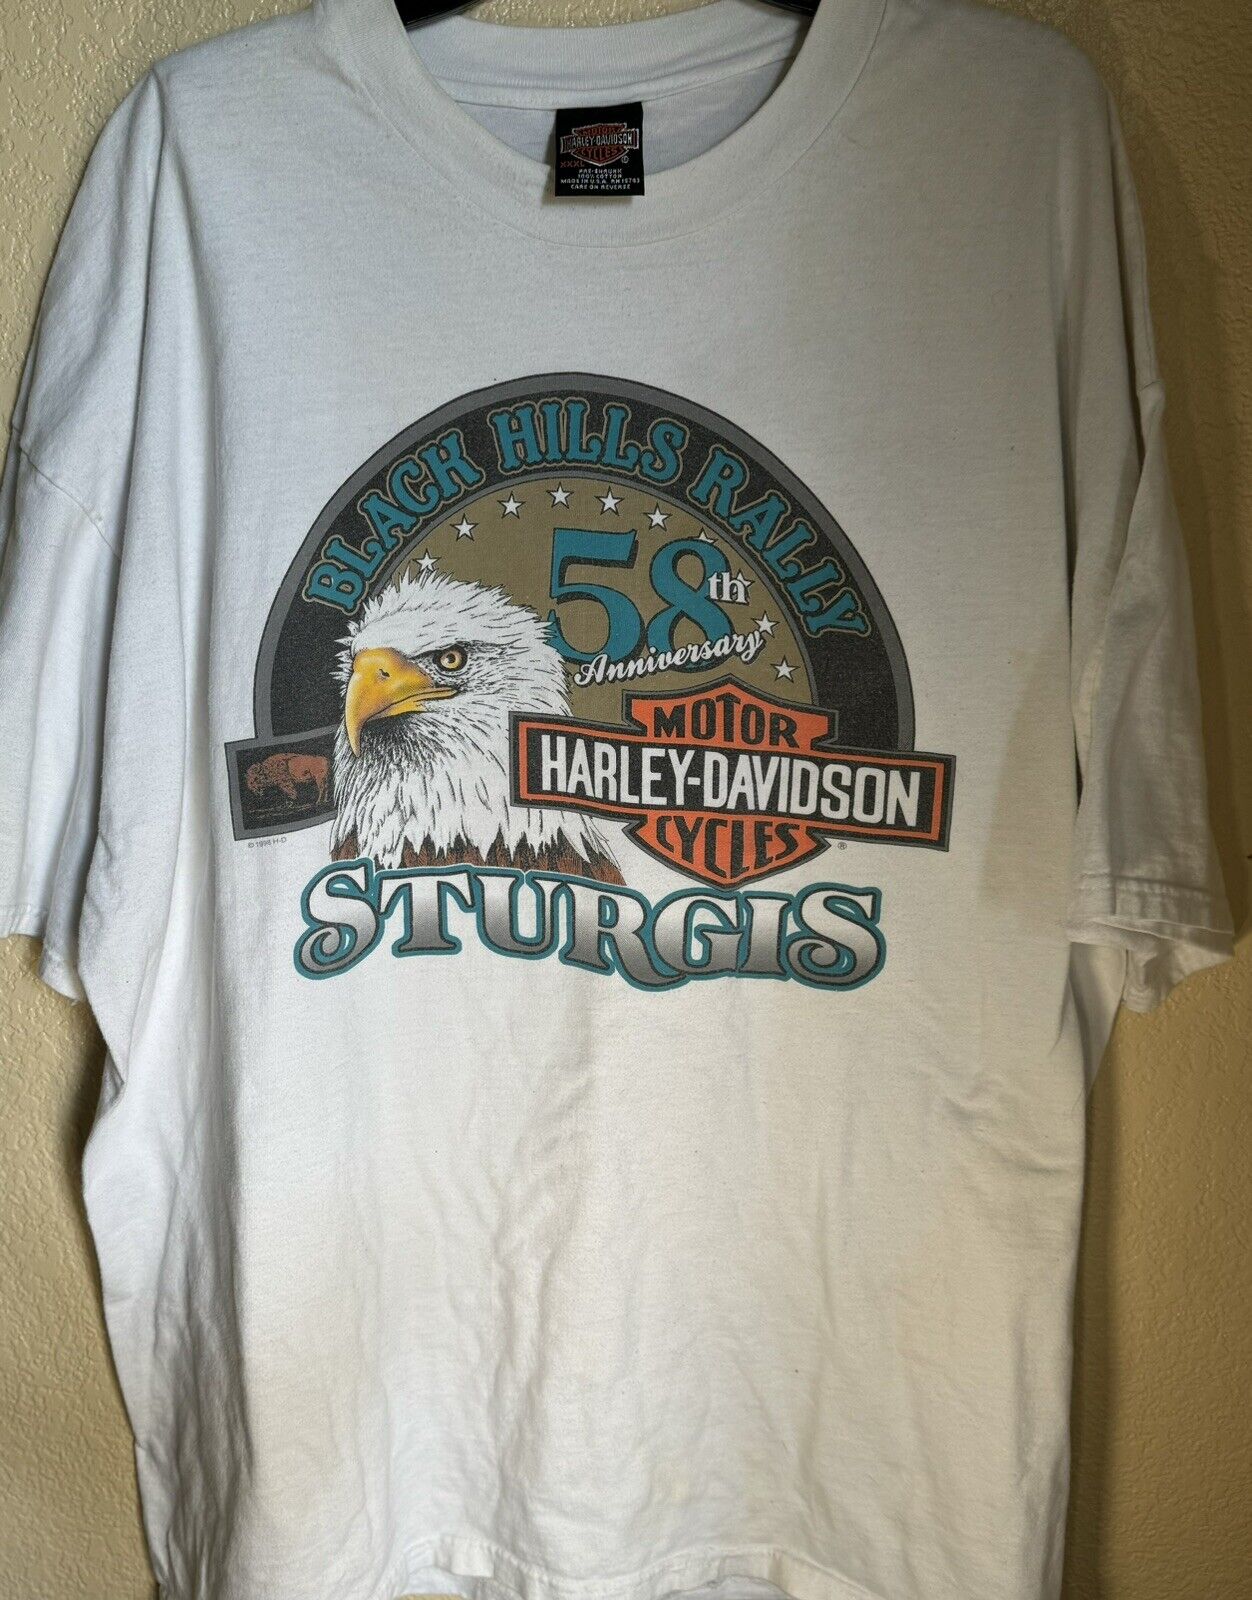 Vintage Harley Davidson 1996 Sturgis 58th Anniversary Shirt Size 3X